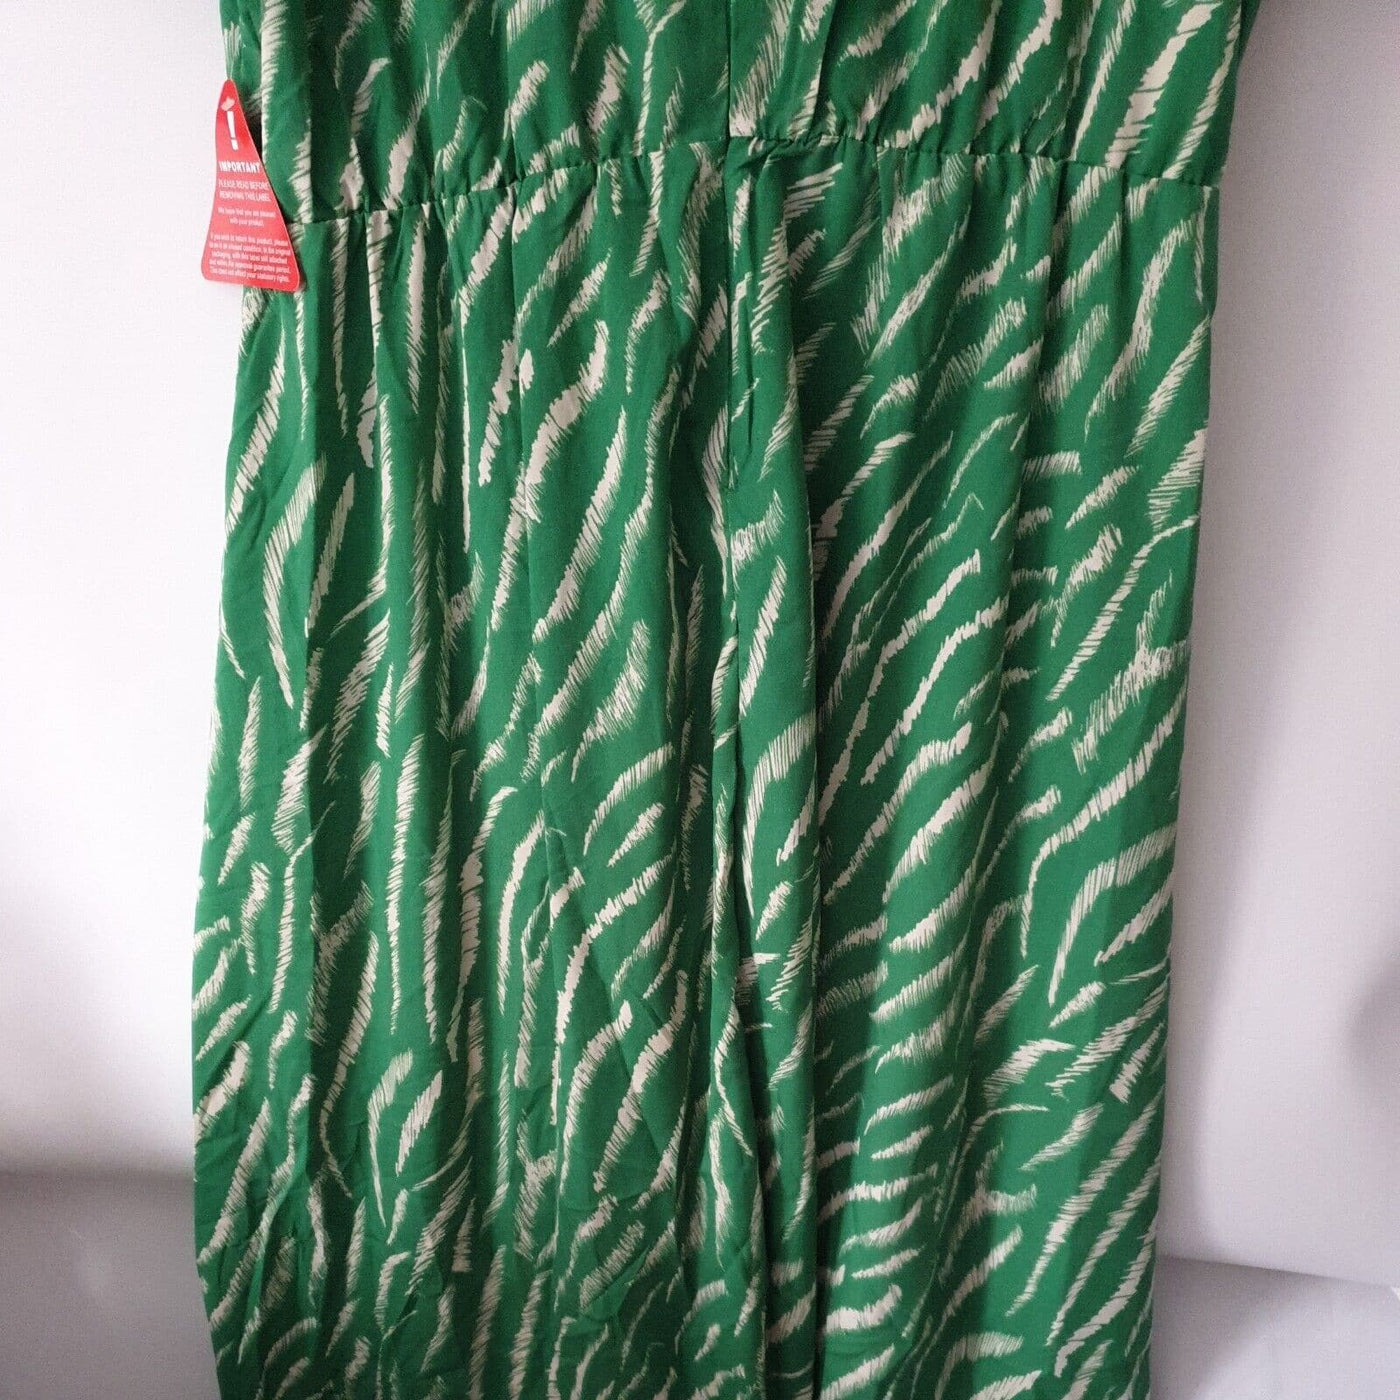 AX Paris Curve Apple Green Printed Wrap Midi Dress Size 26****Ref V68 - Big_Stock_Clearance